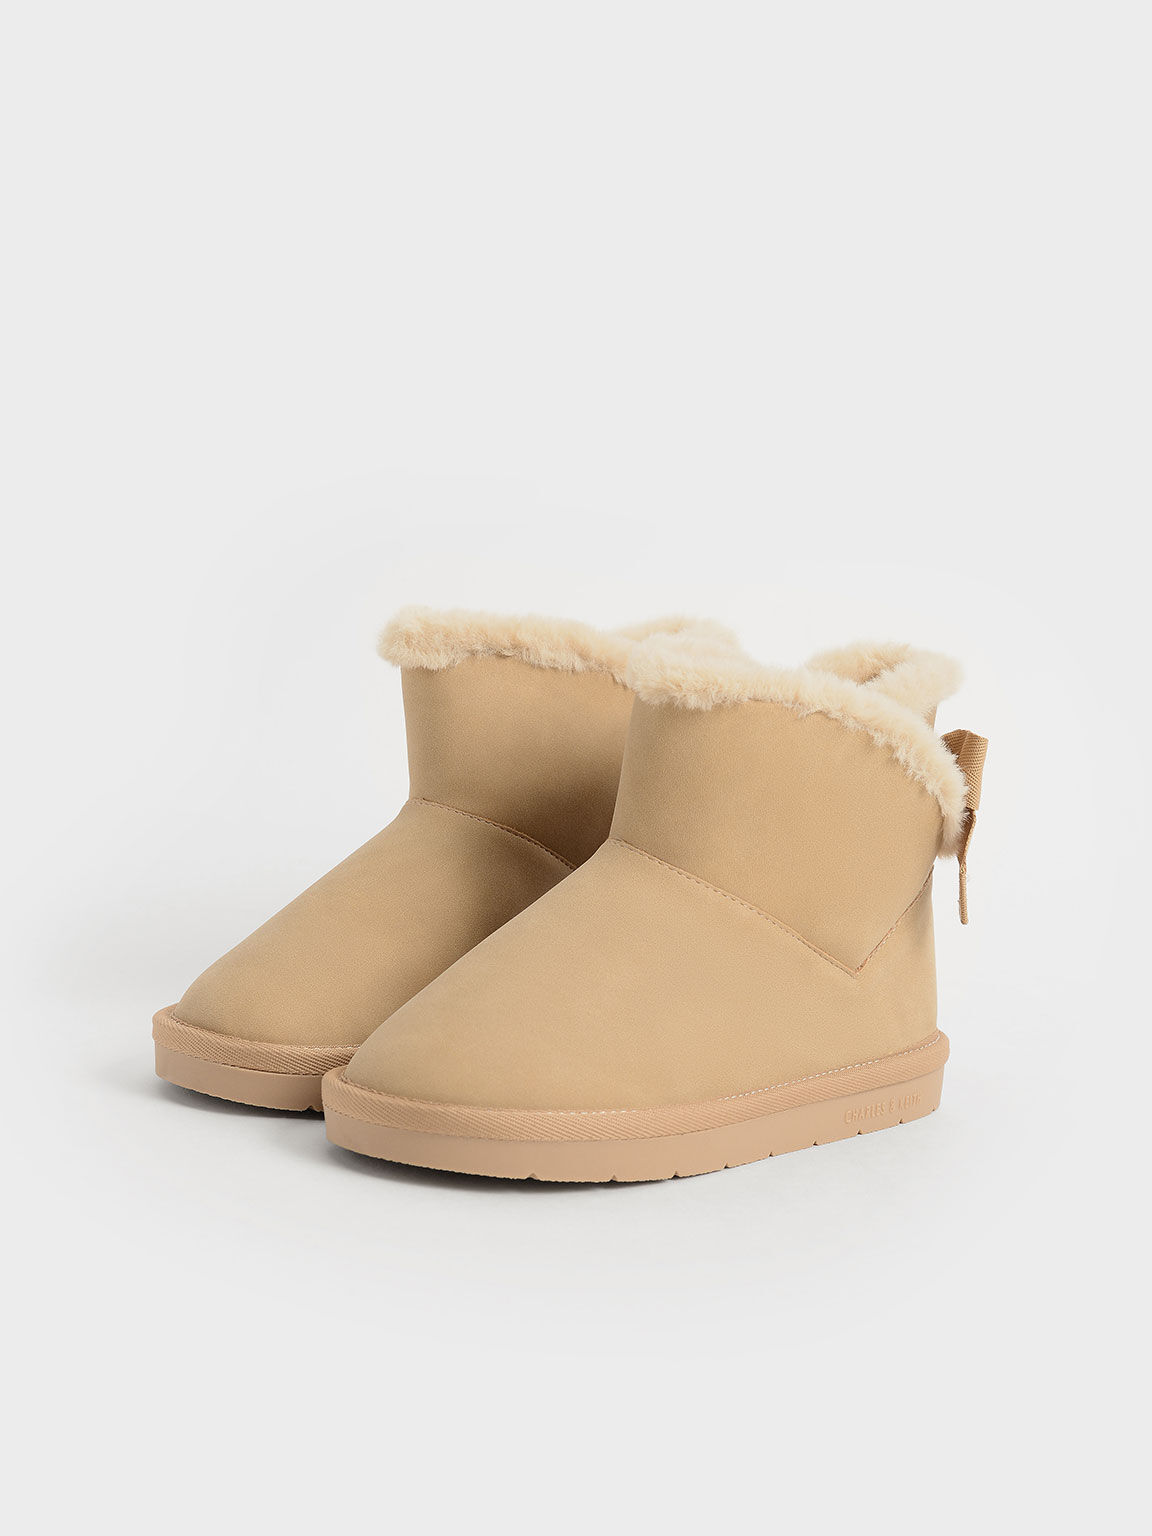 Girls Fashion Faux Suede Camel Color Ankle Flat Boots With Faux Fur Trim 